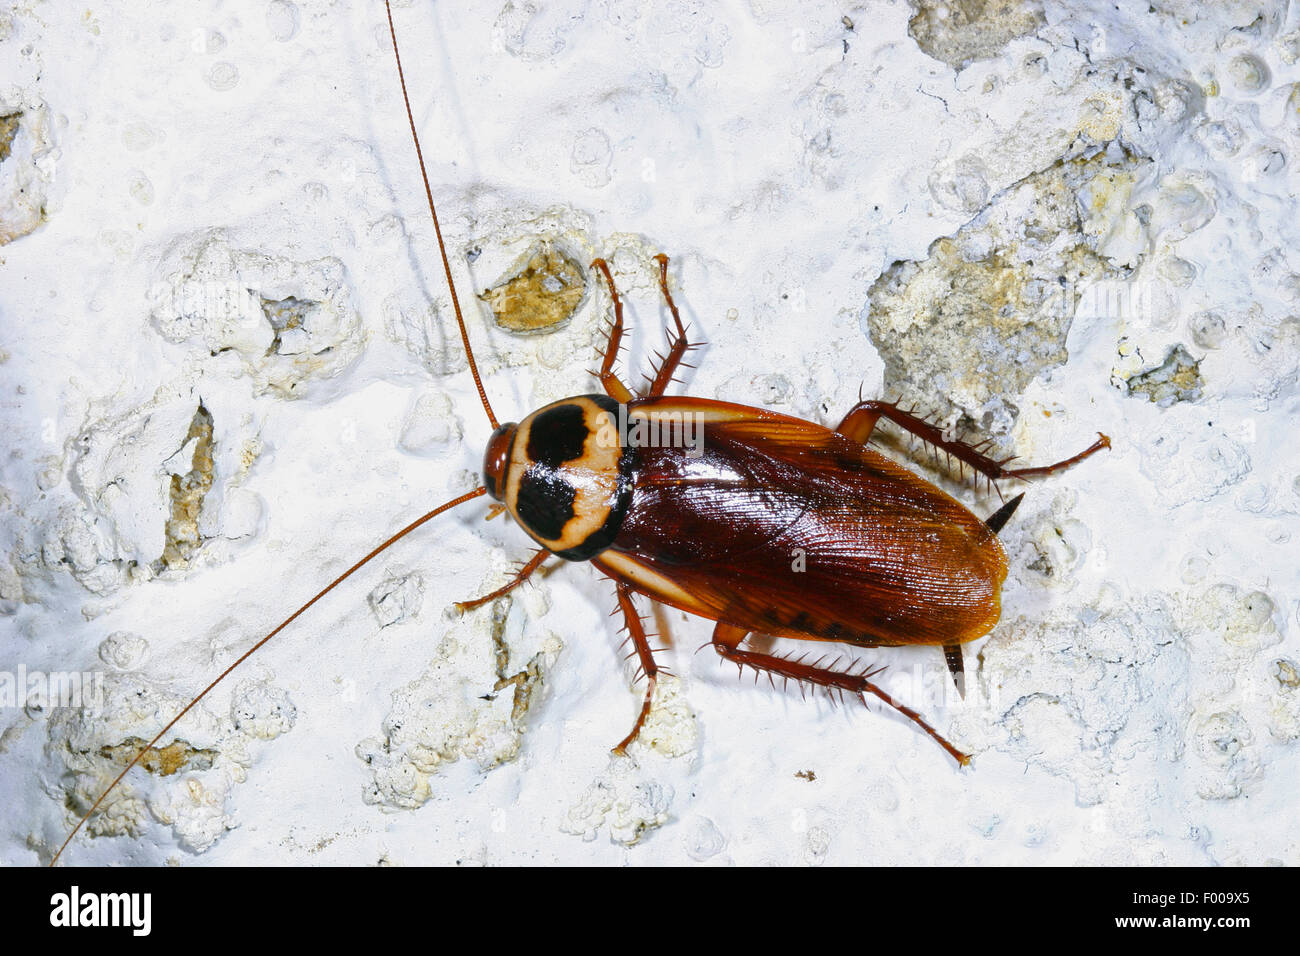 Australian cockroach (Periplaneta australasiae, Blatta australasiae), on flaking finery, Germany Stock Photo